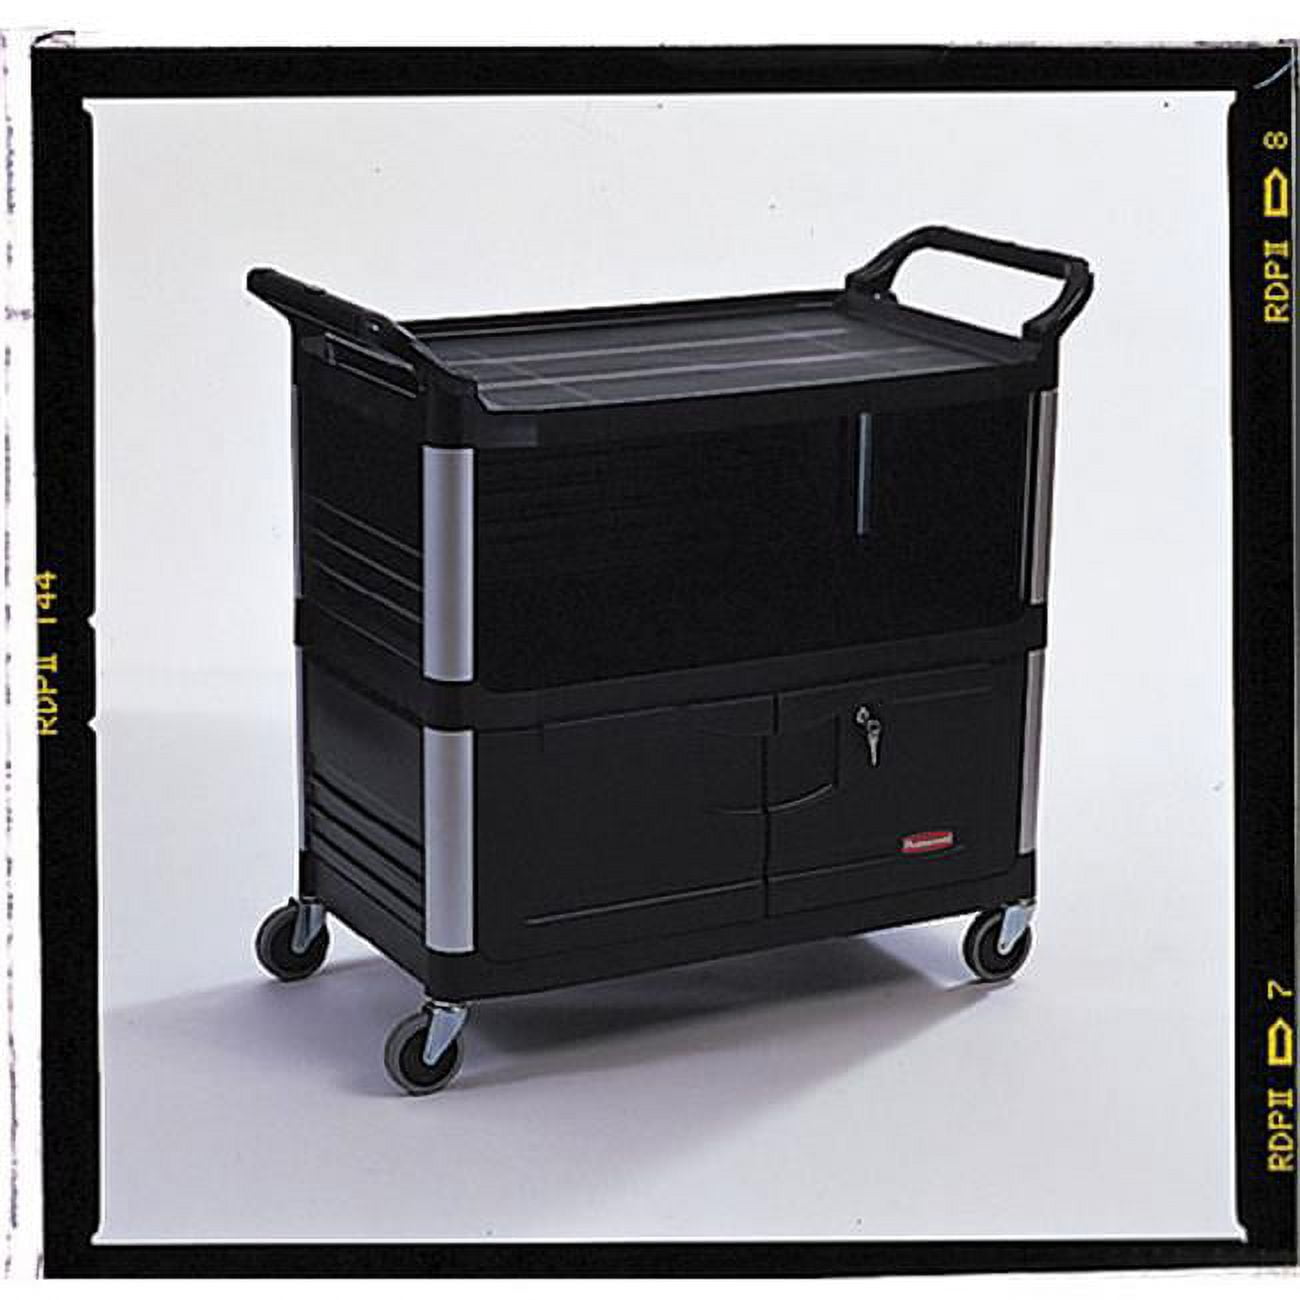 Rubbermaid Commercial Xtra Equipment Cart - Black